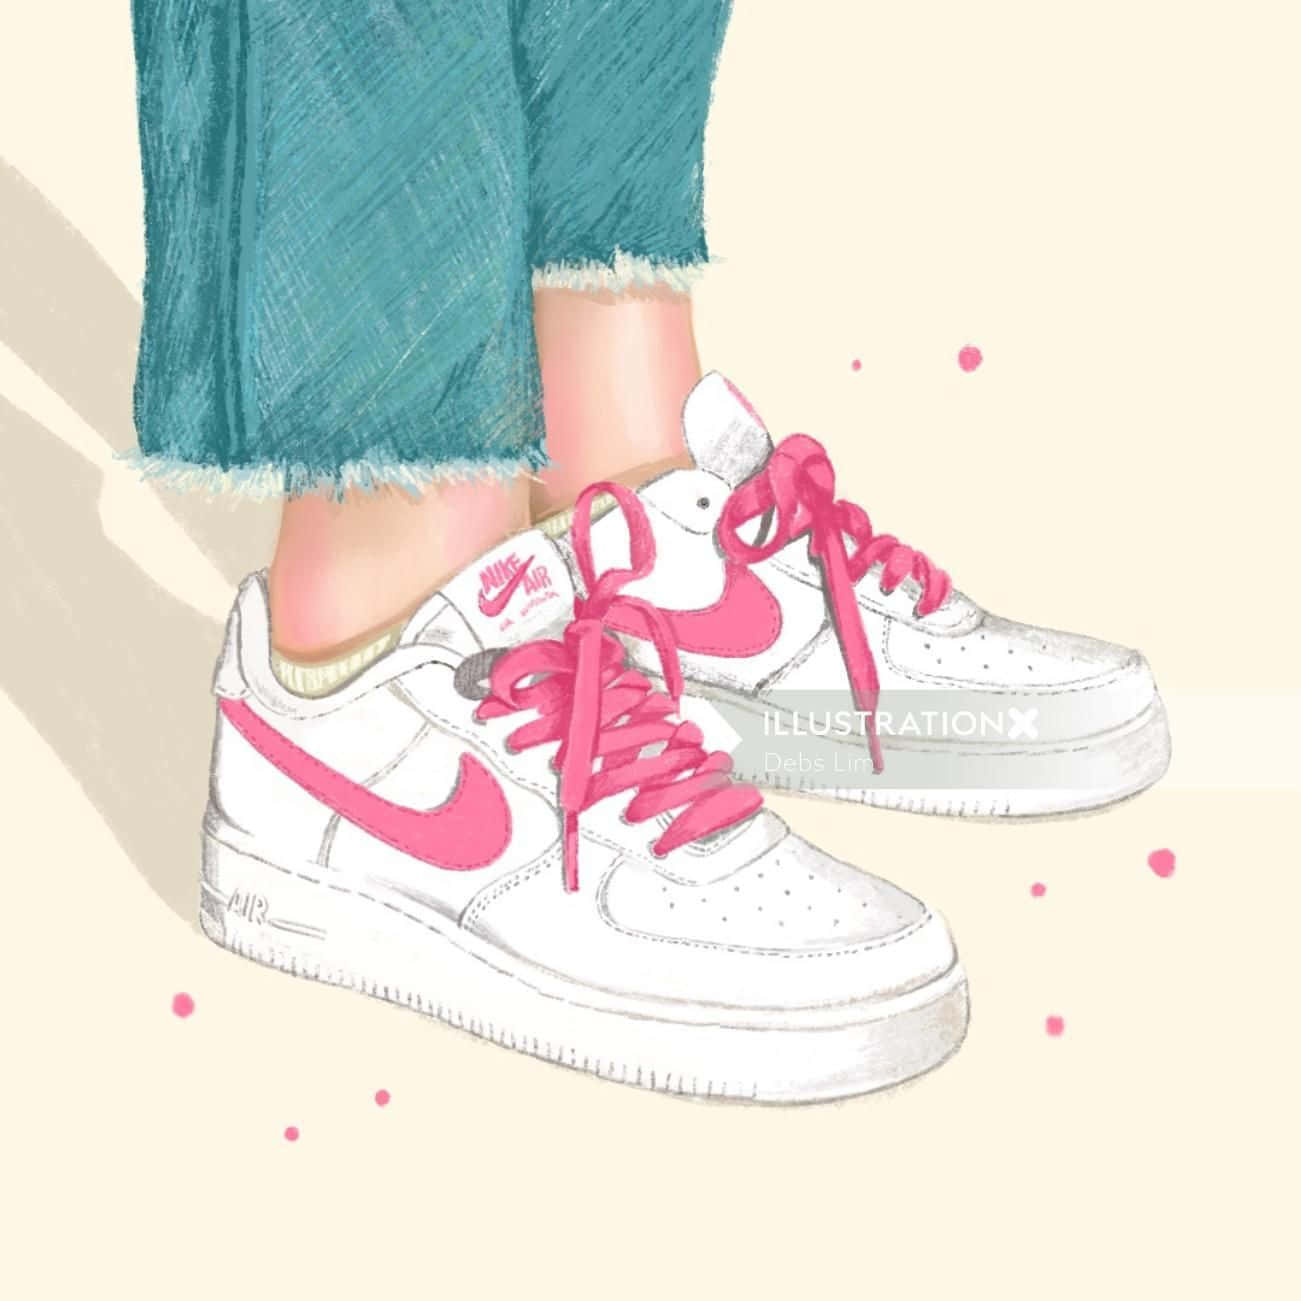 Nike Air Force 1 Sneakers Illustration